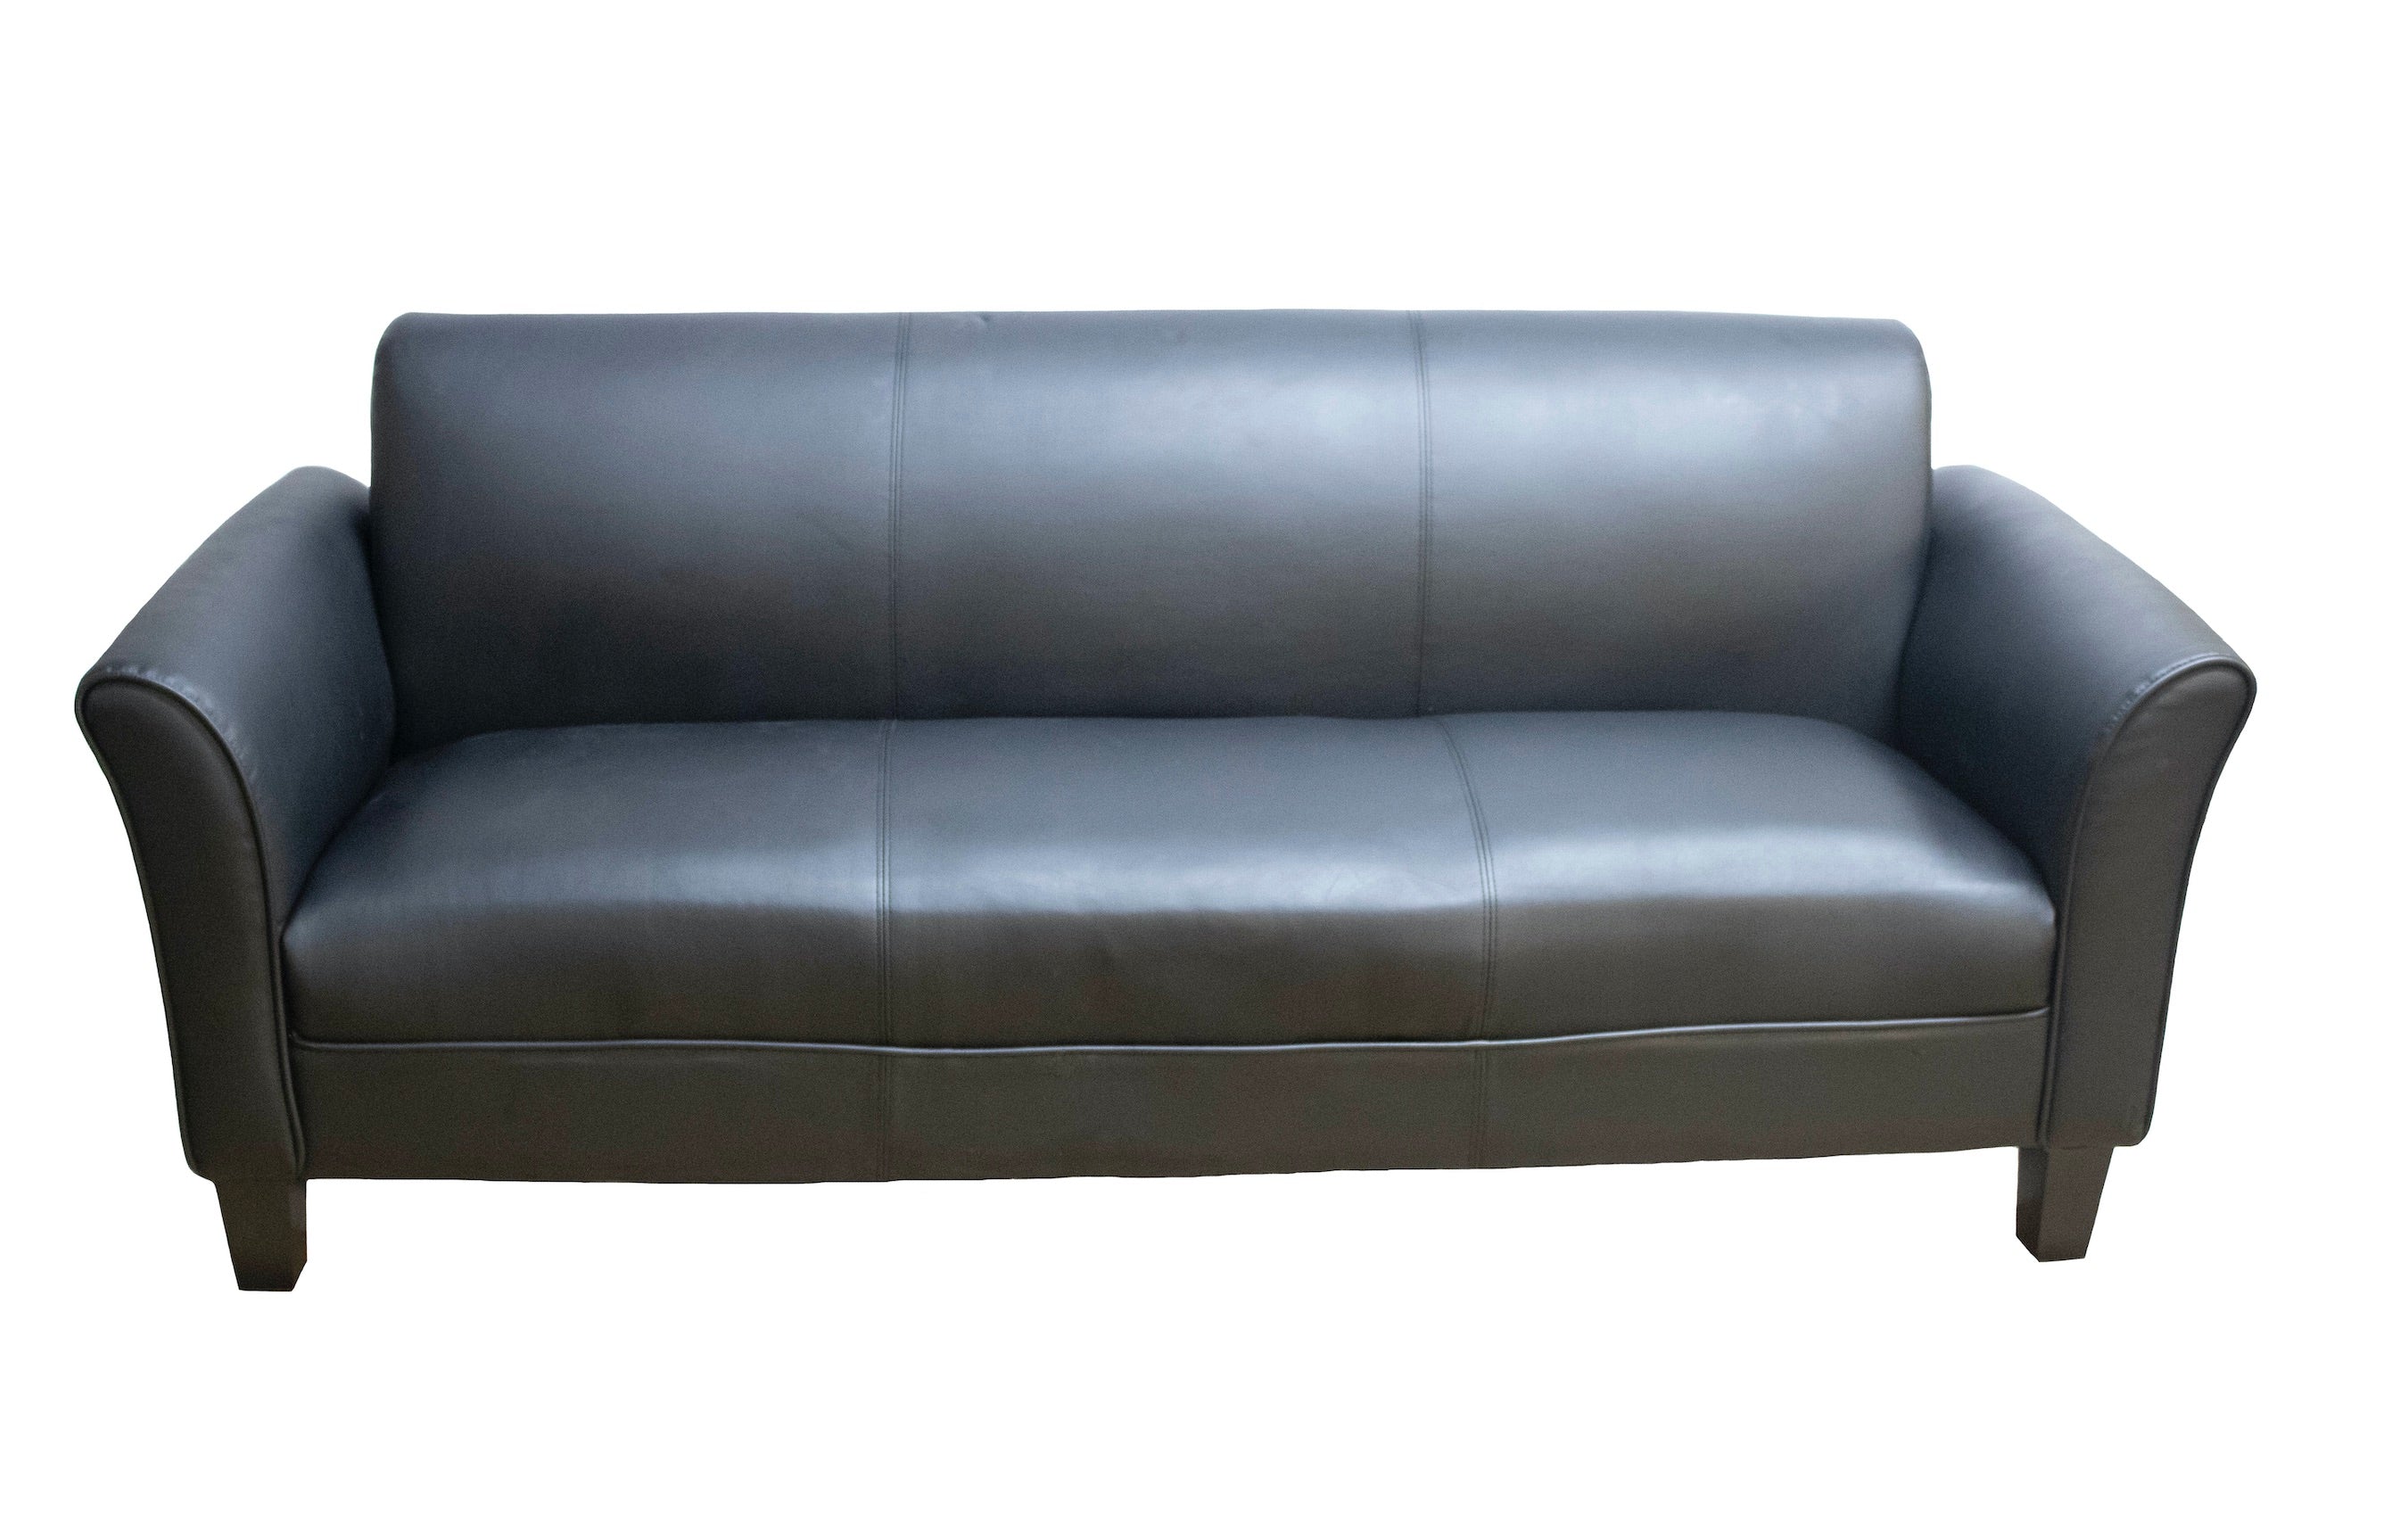 Alera Reception Lounge Sofa - Preowned